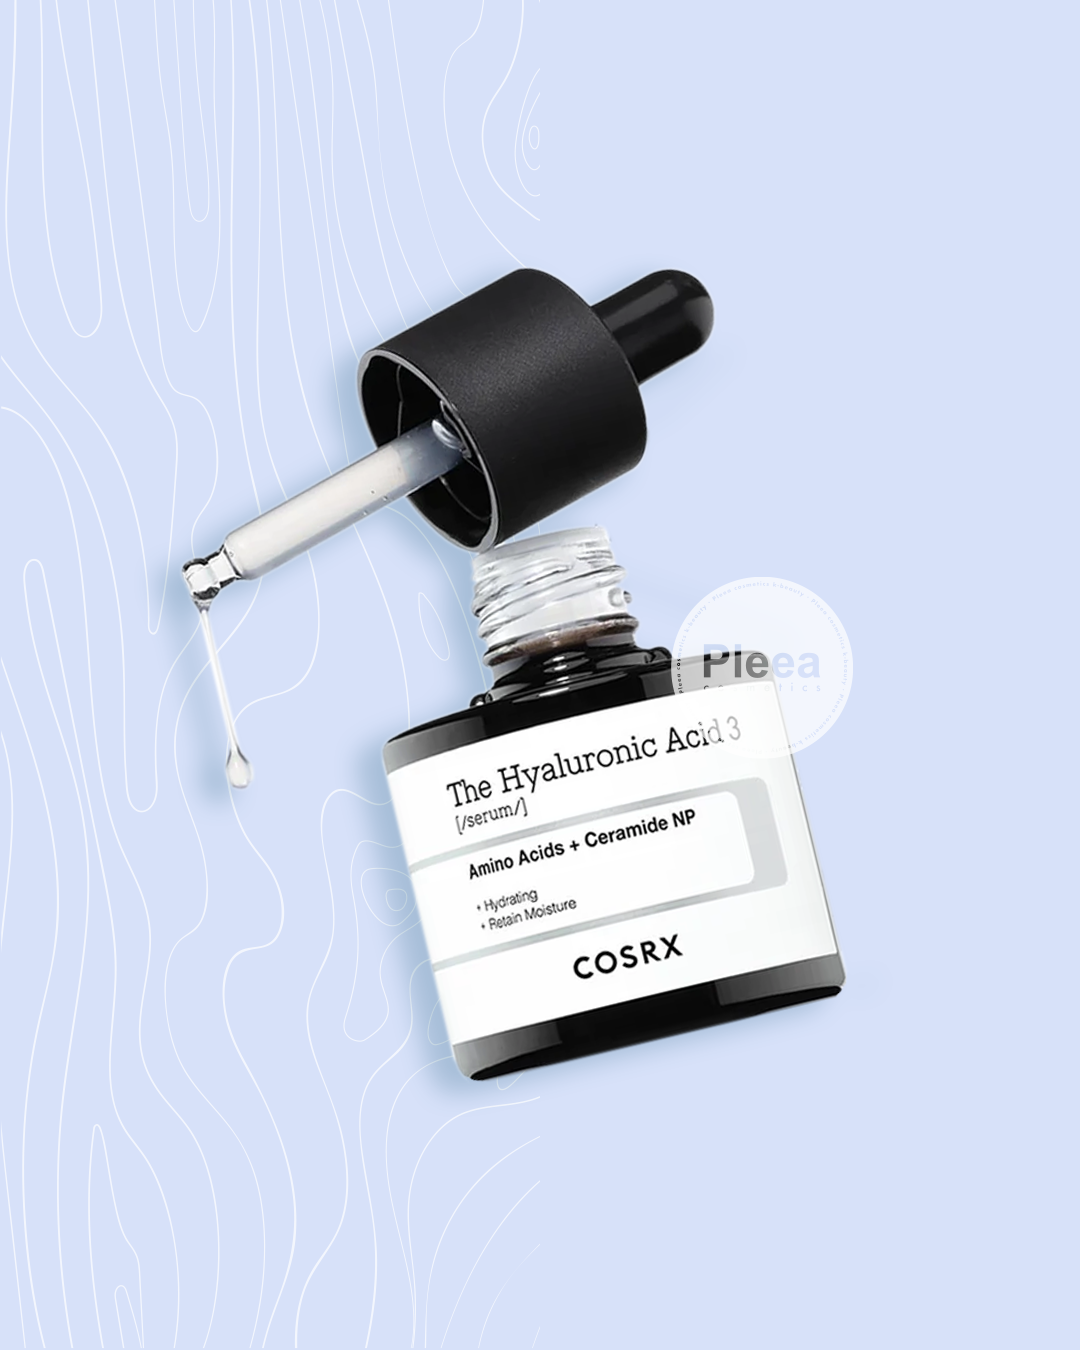 [COSRX]-The-Hyaluronic-Acid-3-Serum1-k-beauty-colombia-cosmetica-coreana